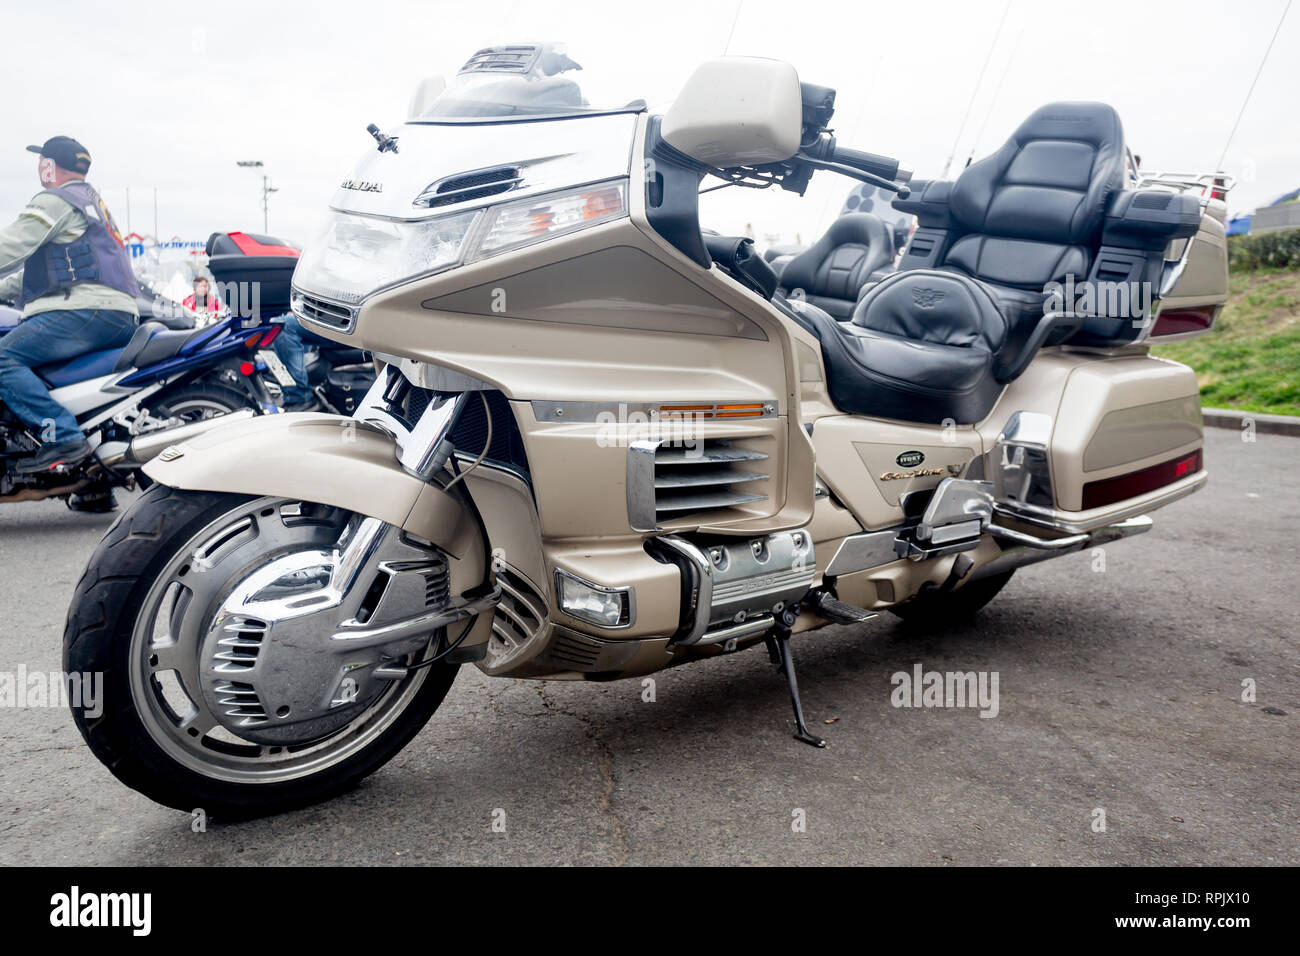 Russland, Wladiwostok, 10/06/2018. Honda GoldWing 1500 Motorrad (Motorrad)  mit dem Fahrrad in die Innenstadt. Classic Bikes, aktiven Lebensstil,  motorb Stockfotografie - Alamy